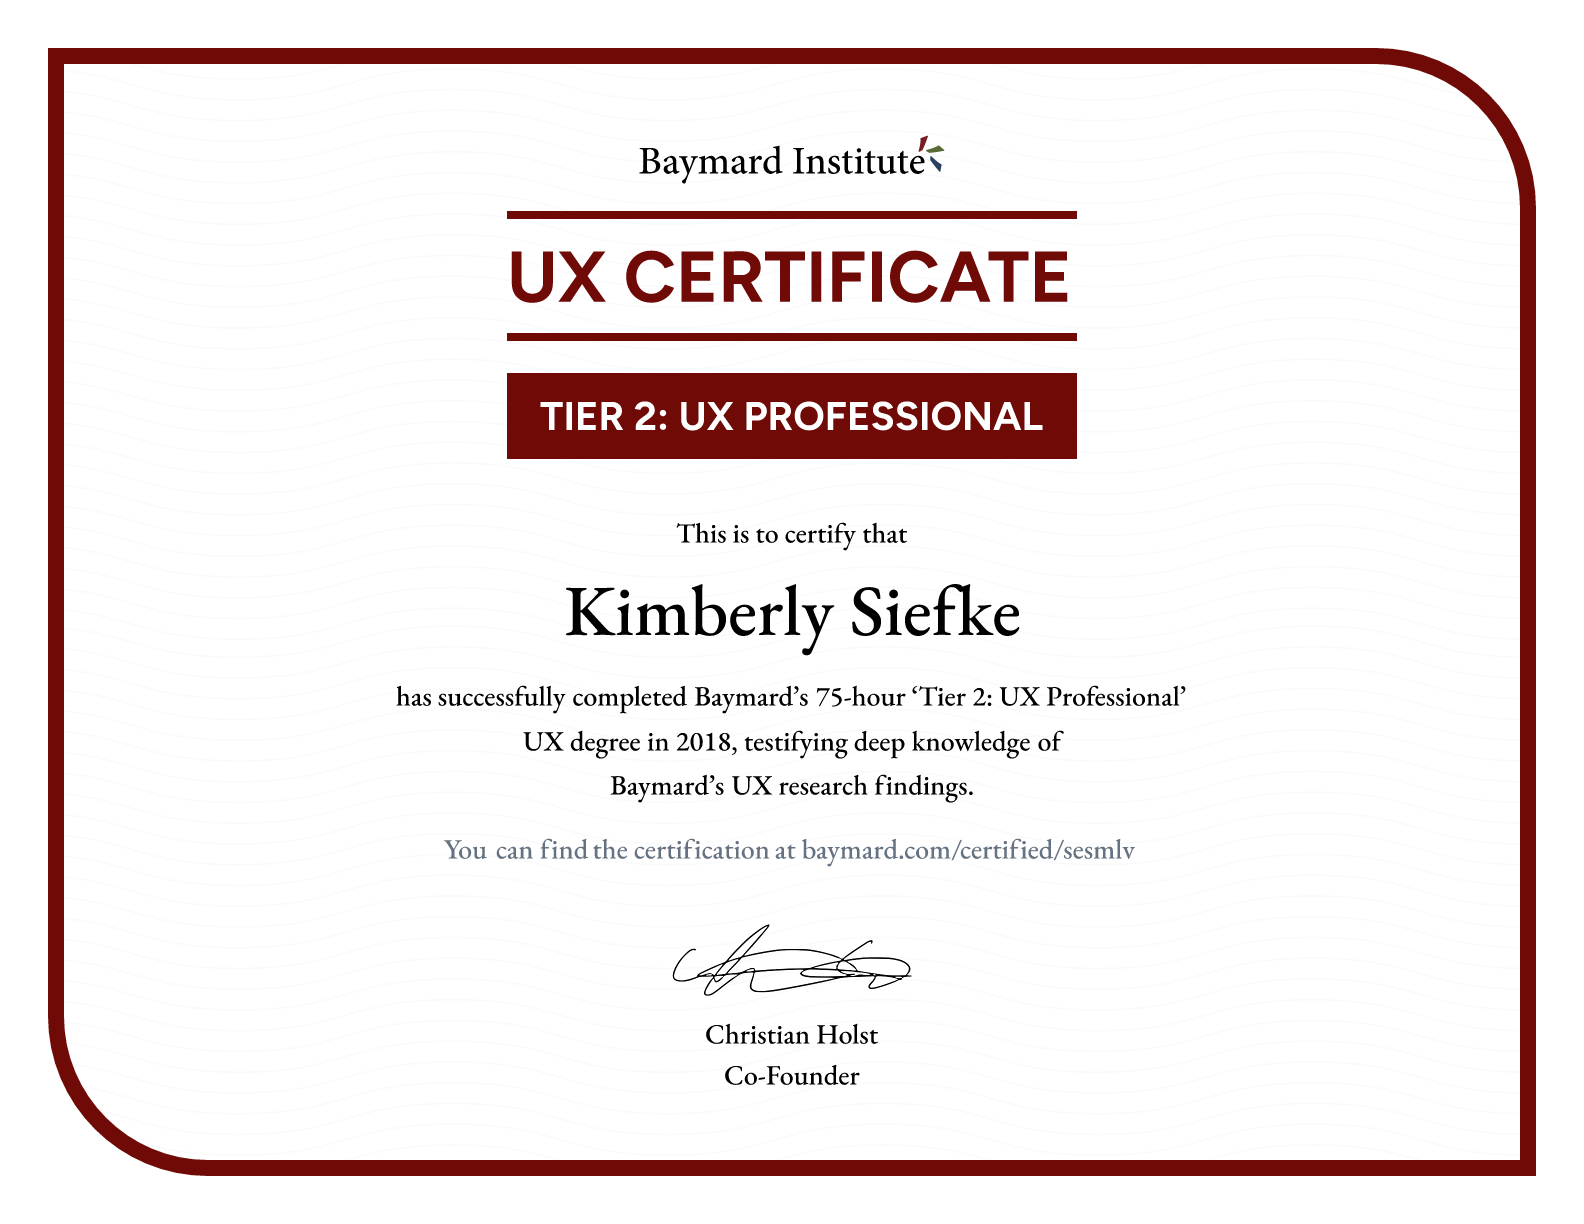 Kimberly Siefke’s certificate